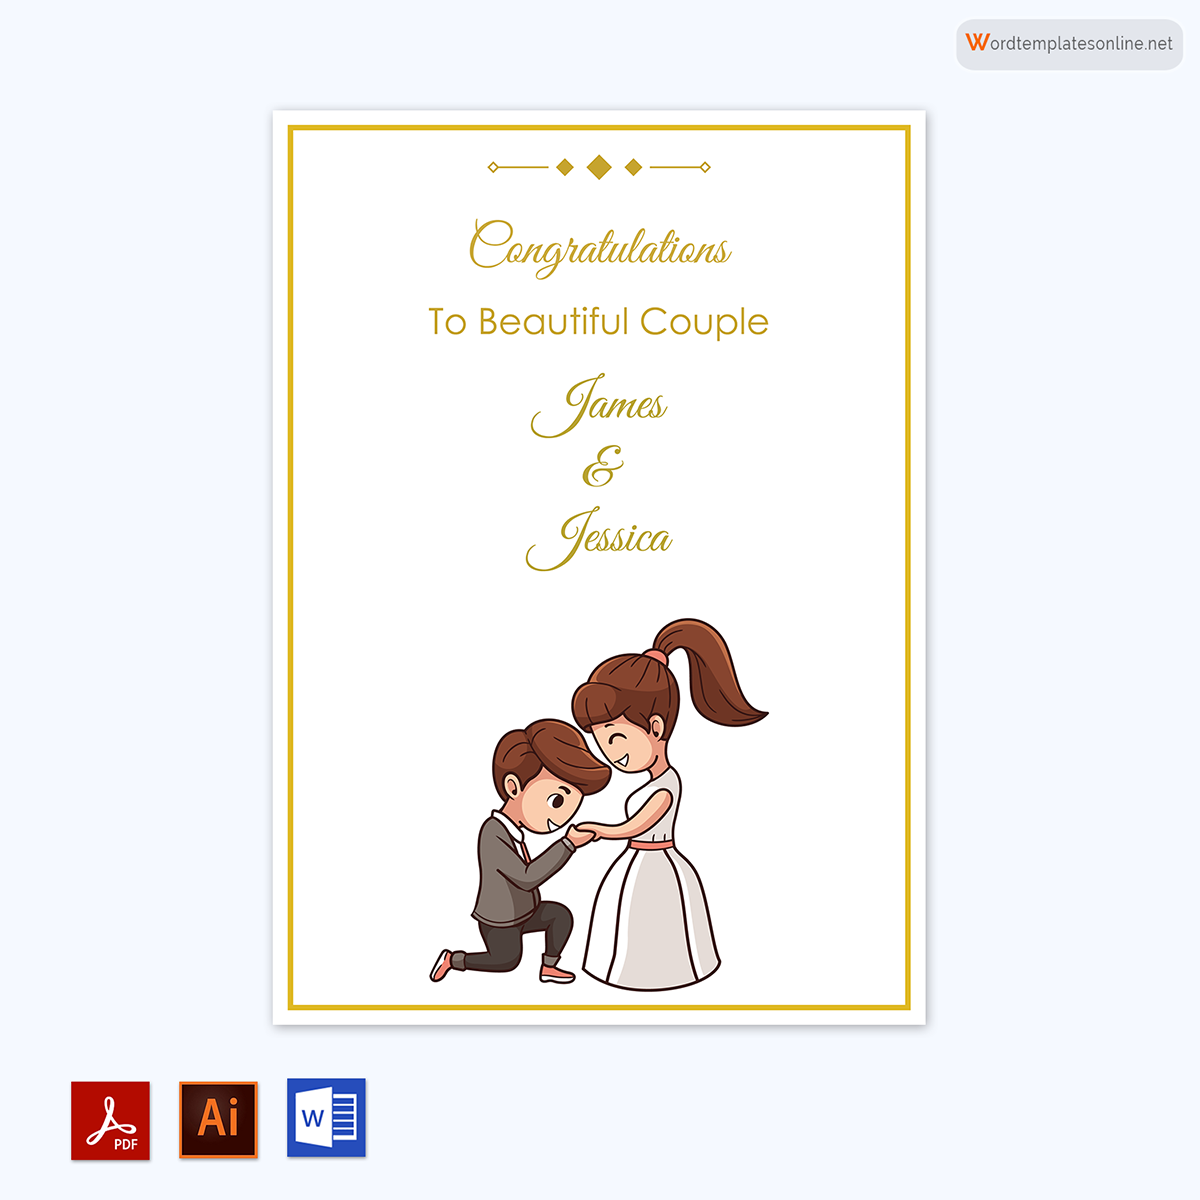 Congratulations card images 04